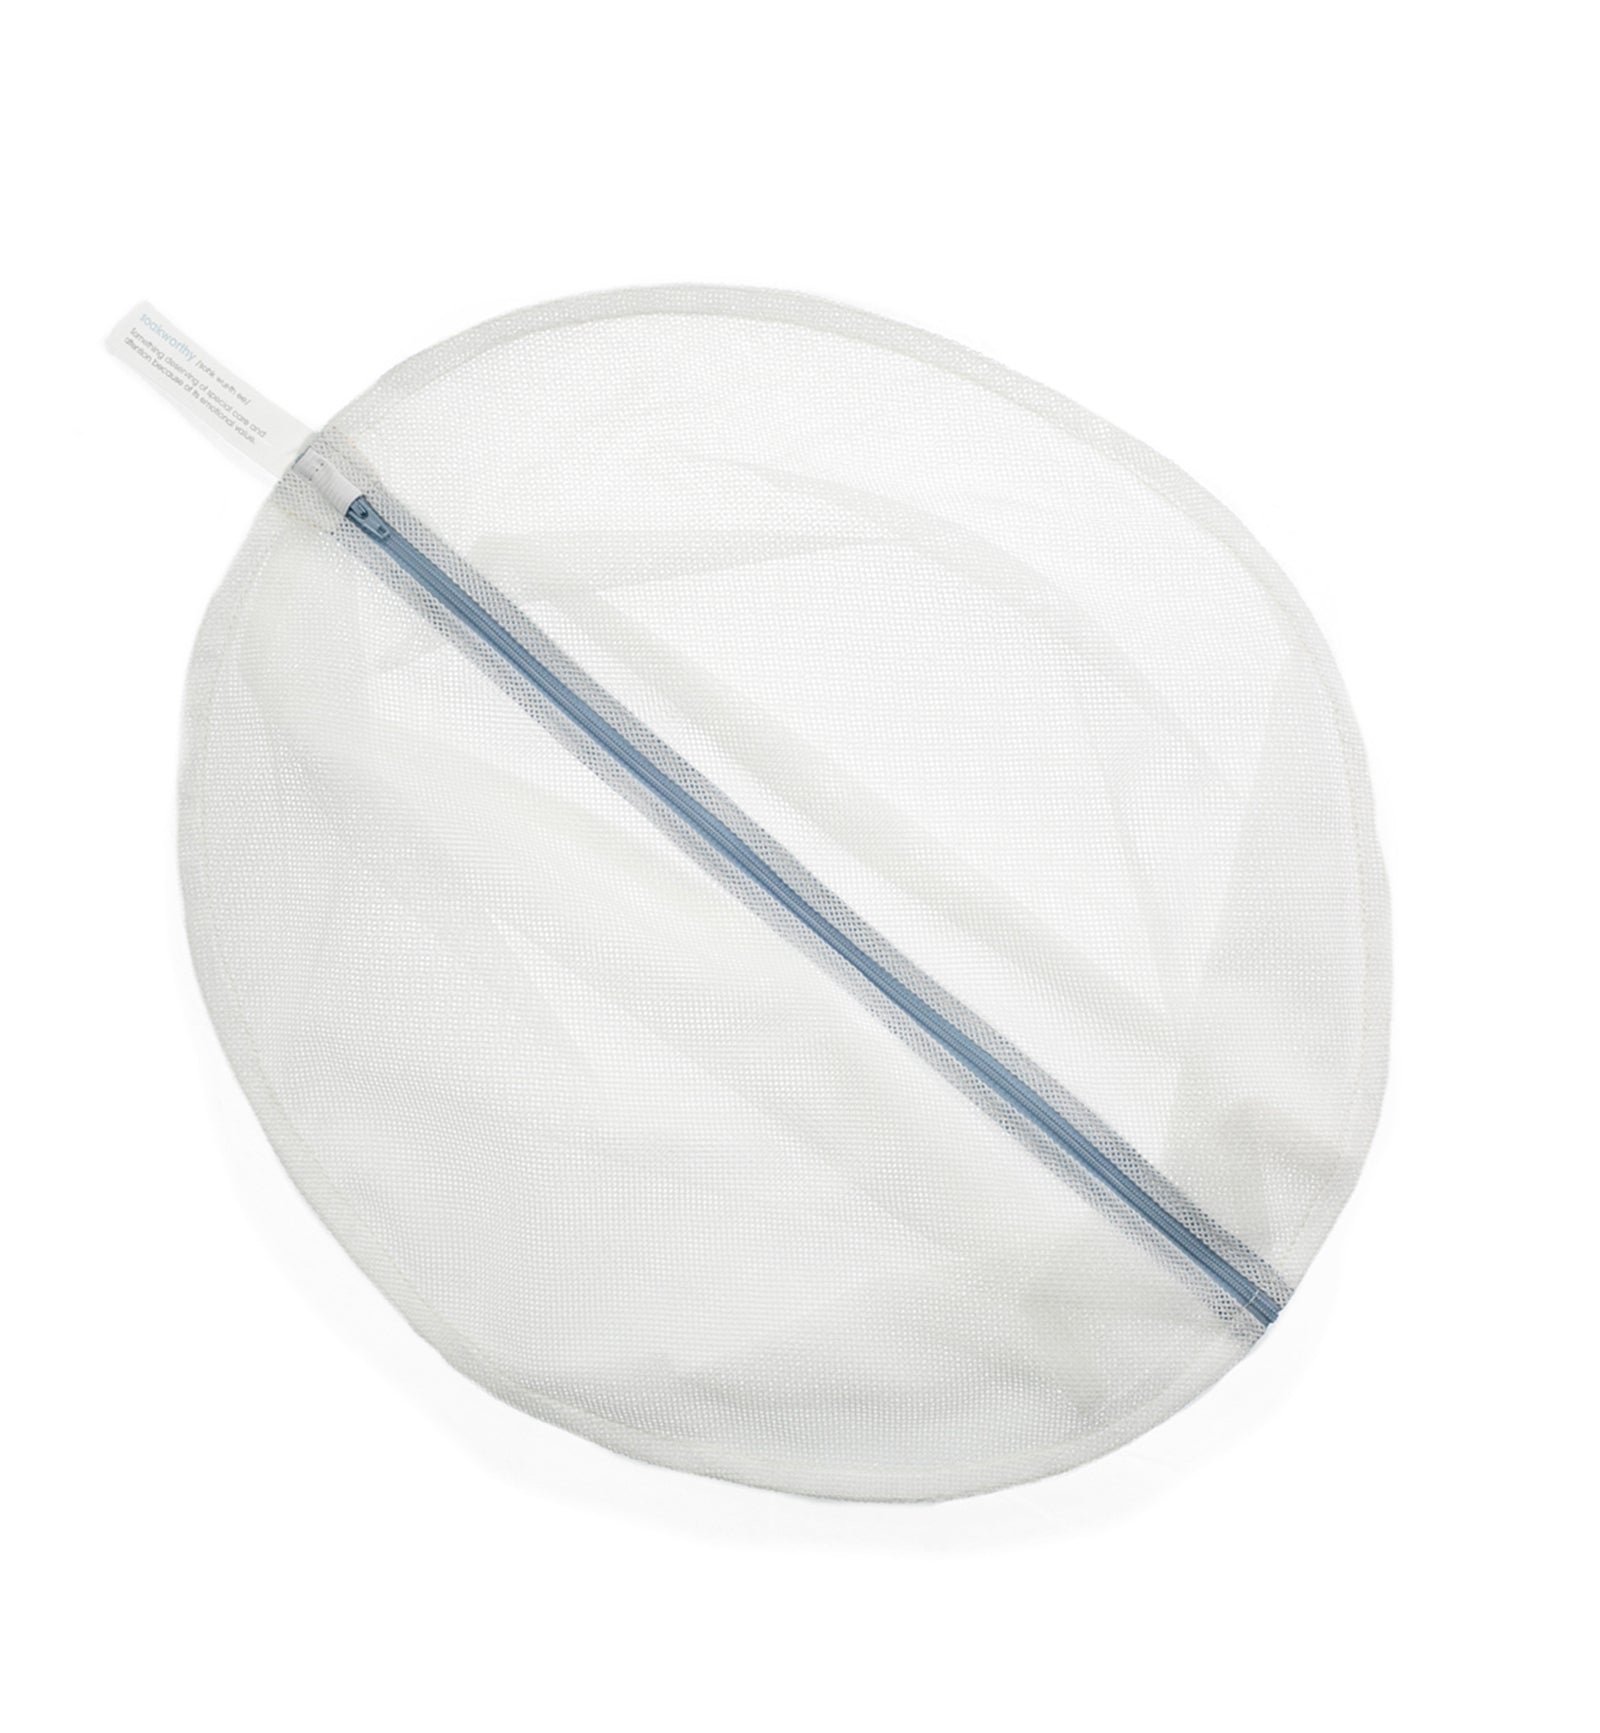 Soak Eco Wash Bag- Generous (16 inch hemisphere),Scentless - Scentless,16 inch hemisphere